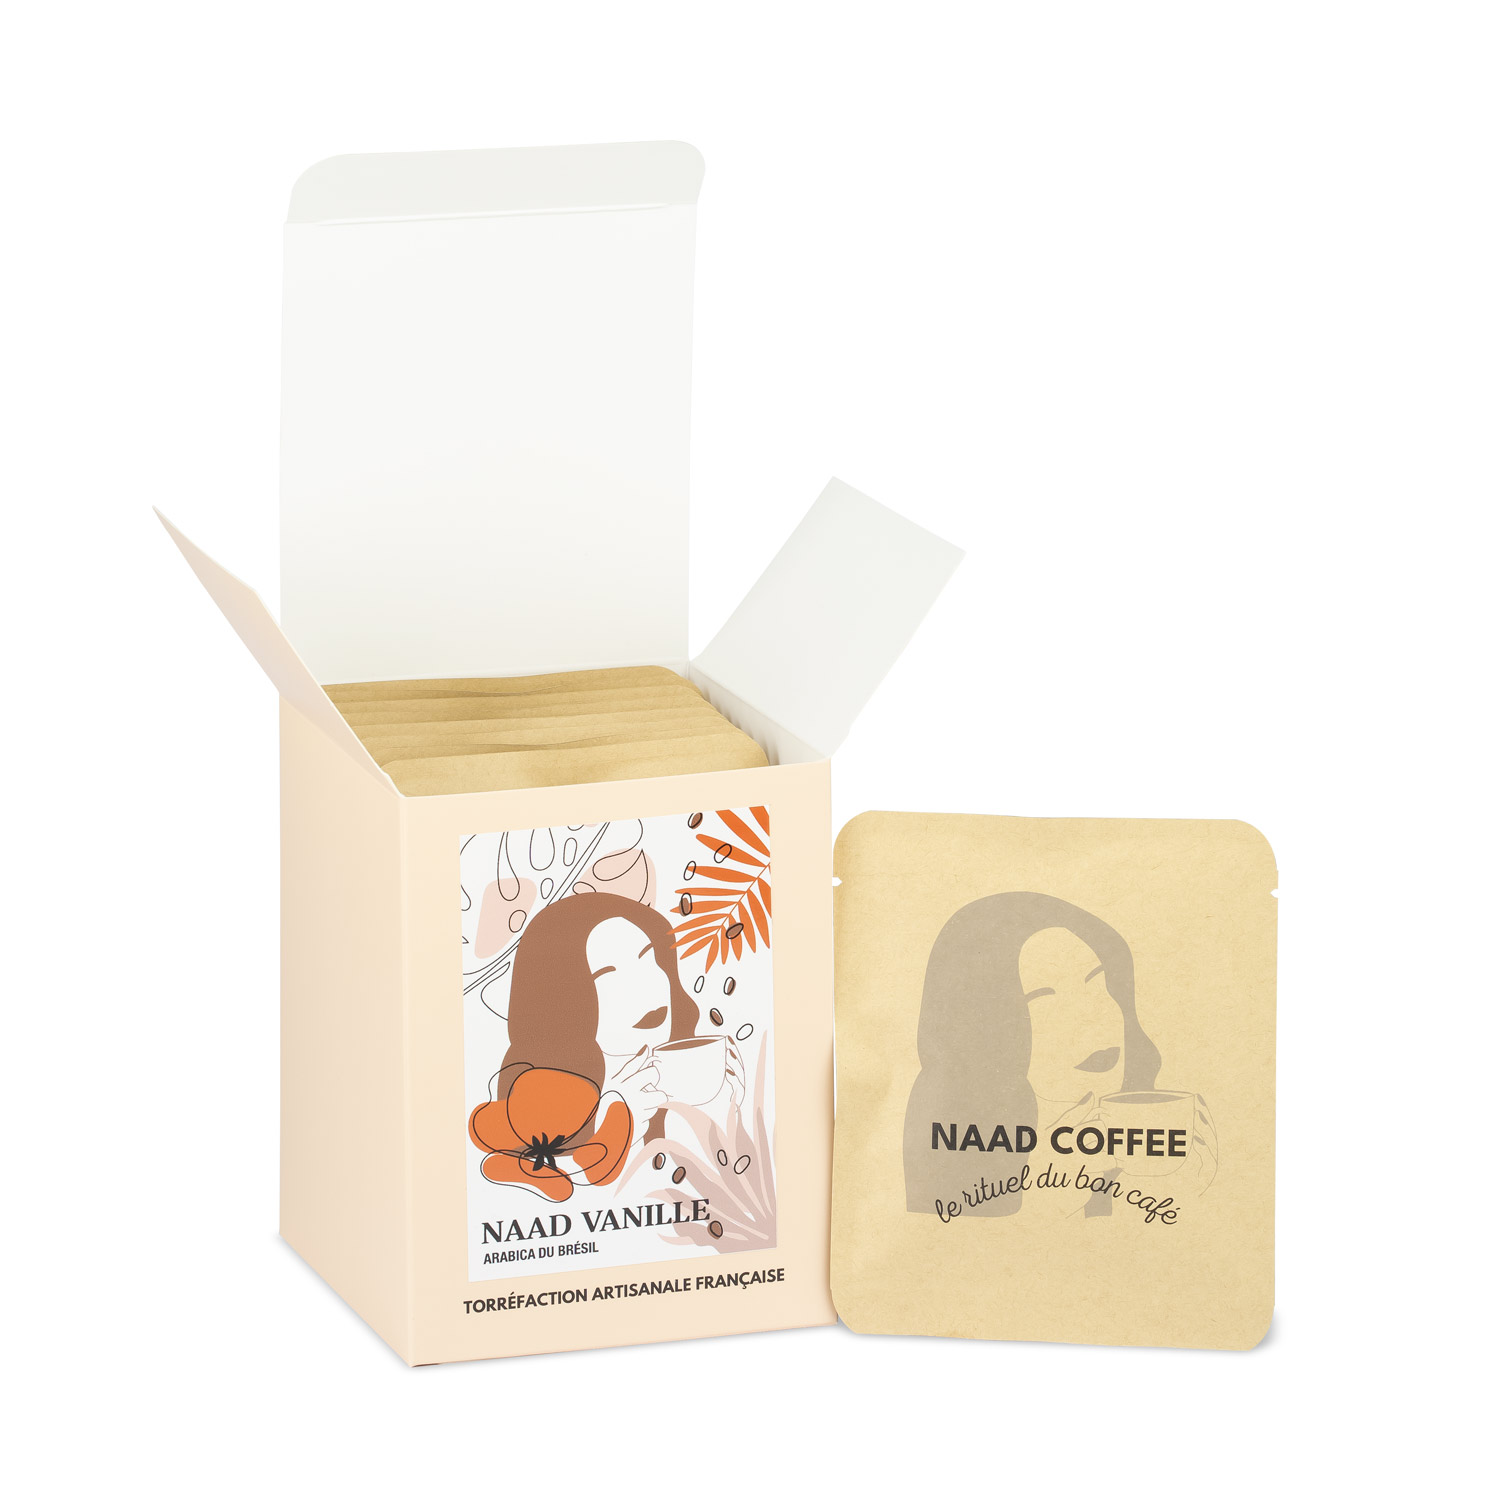 Packshot fond blanc et détourage Naad Coffee x amelioreta.com